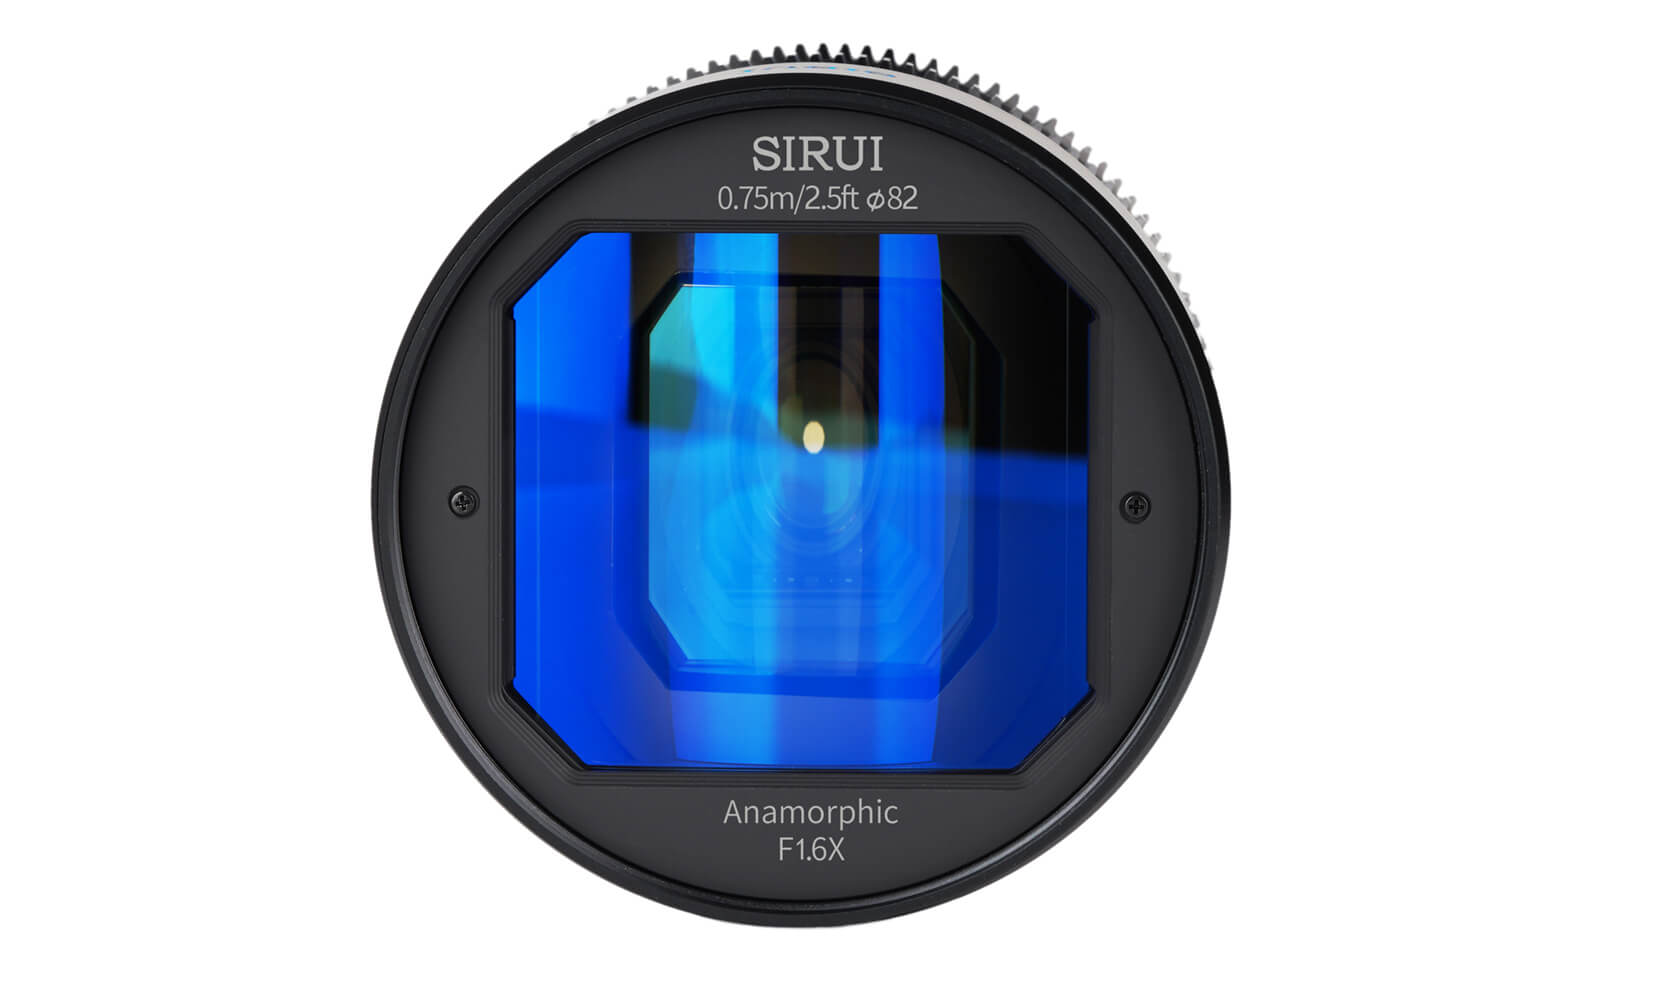 SIRUI Venus 50mm T2.9 1.6x Full-Frame Anamorphic Lens